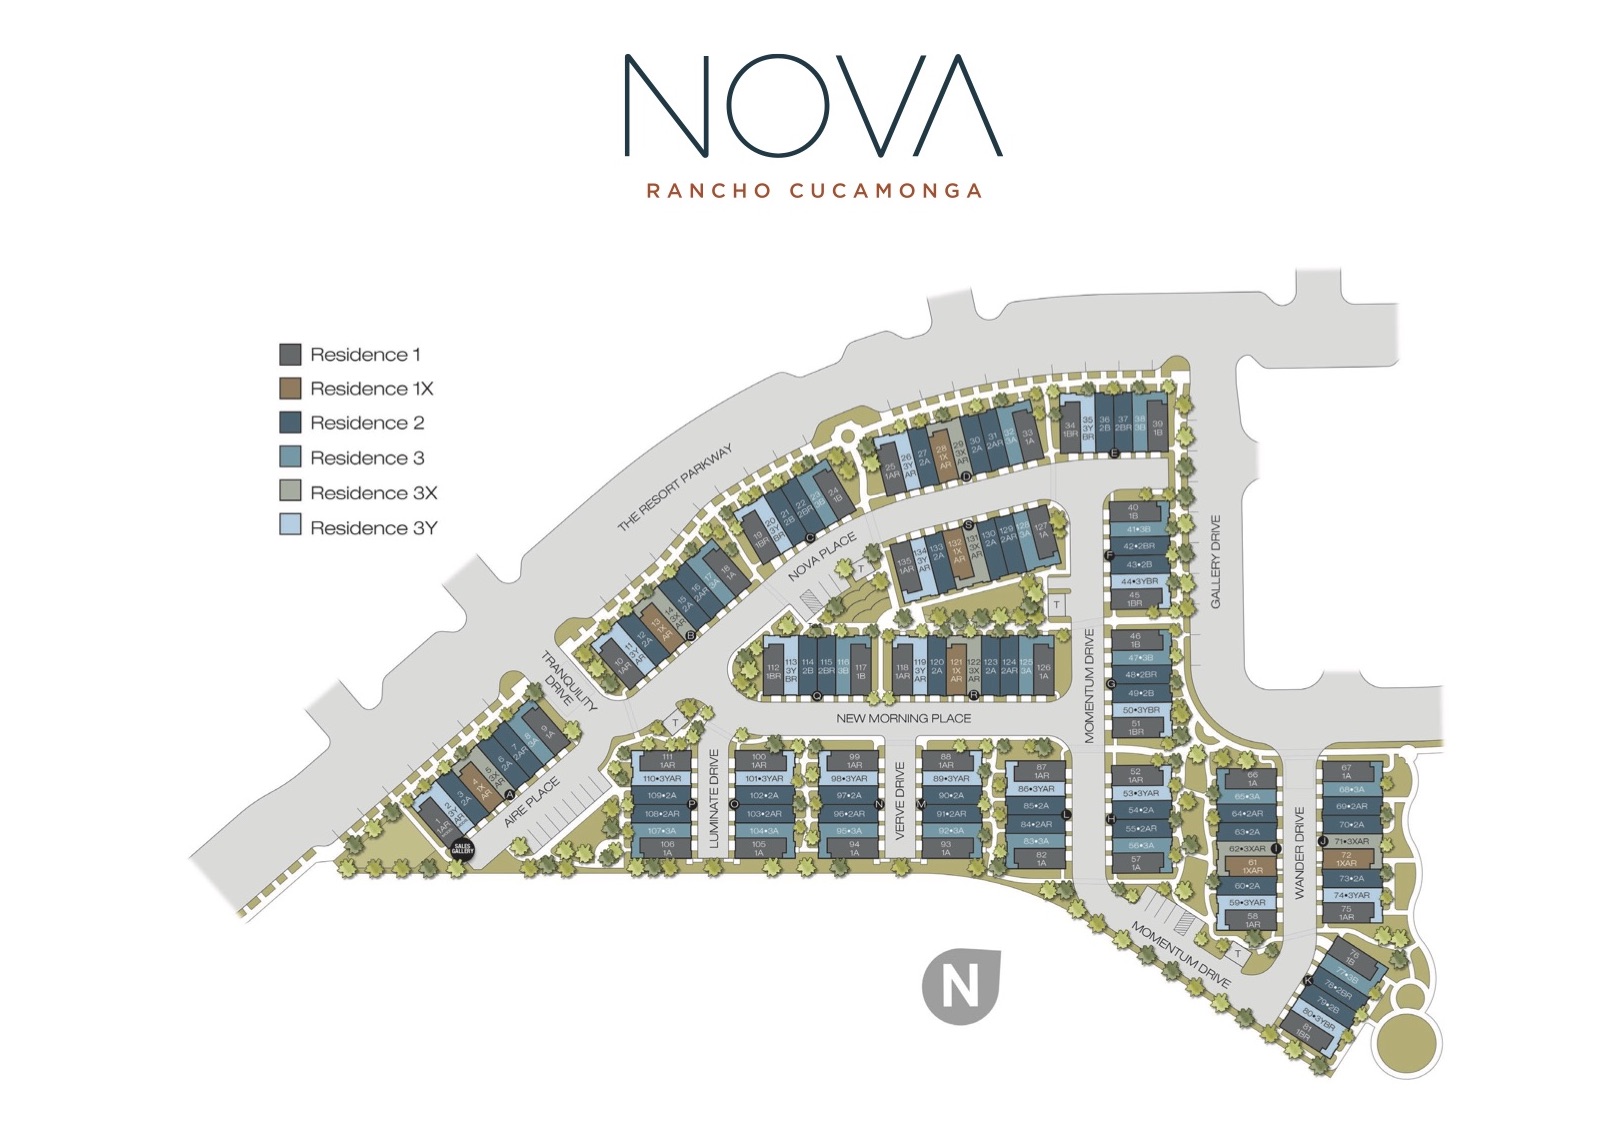 Nova Rancho Cucamonga Site Plan